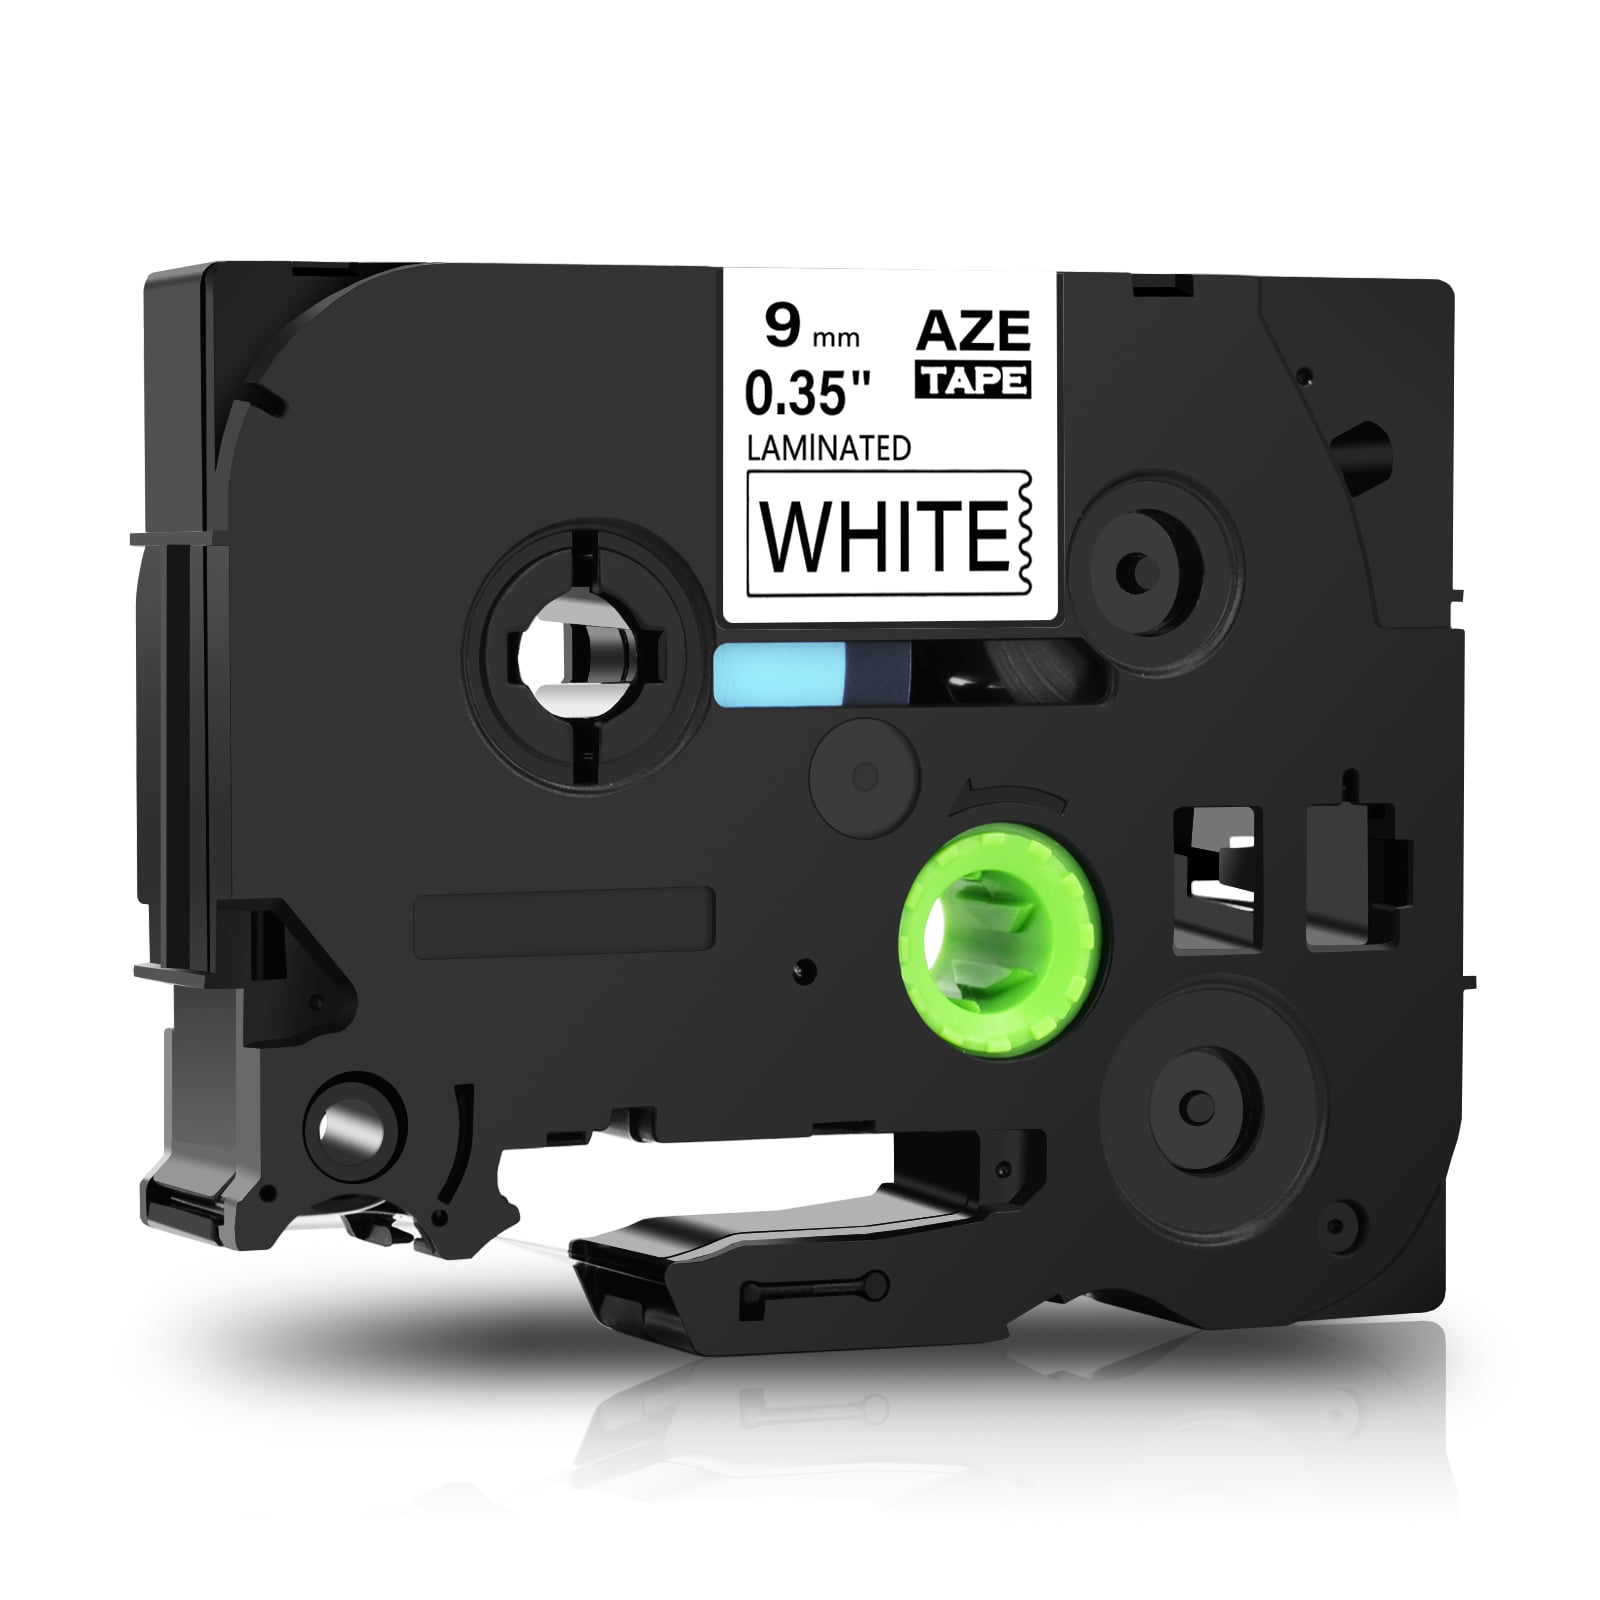 3PK Label Tape TZ-221 TZe-221 9mm Black/White for Brother P-Touch PT-D210 1890C 